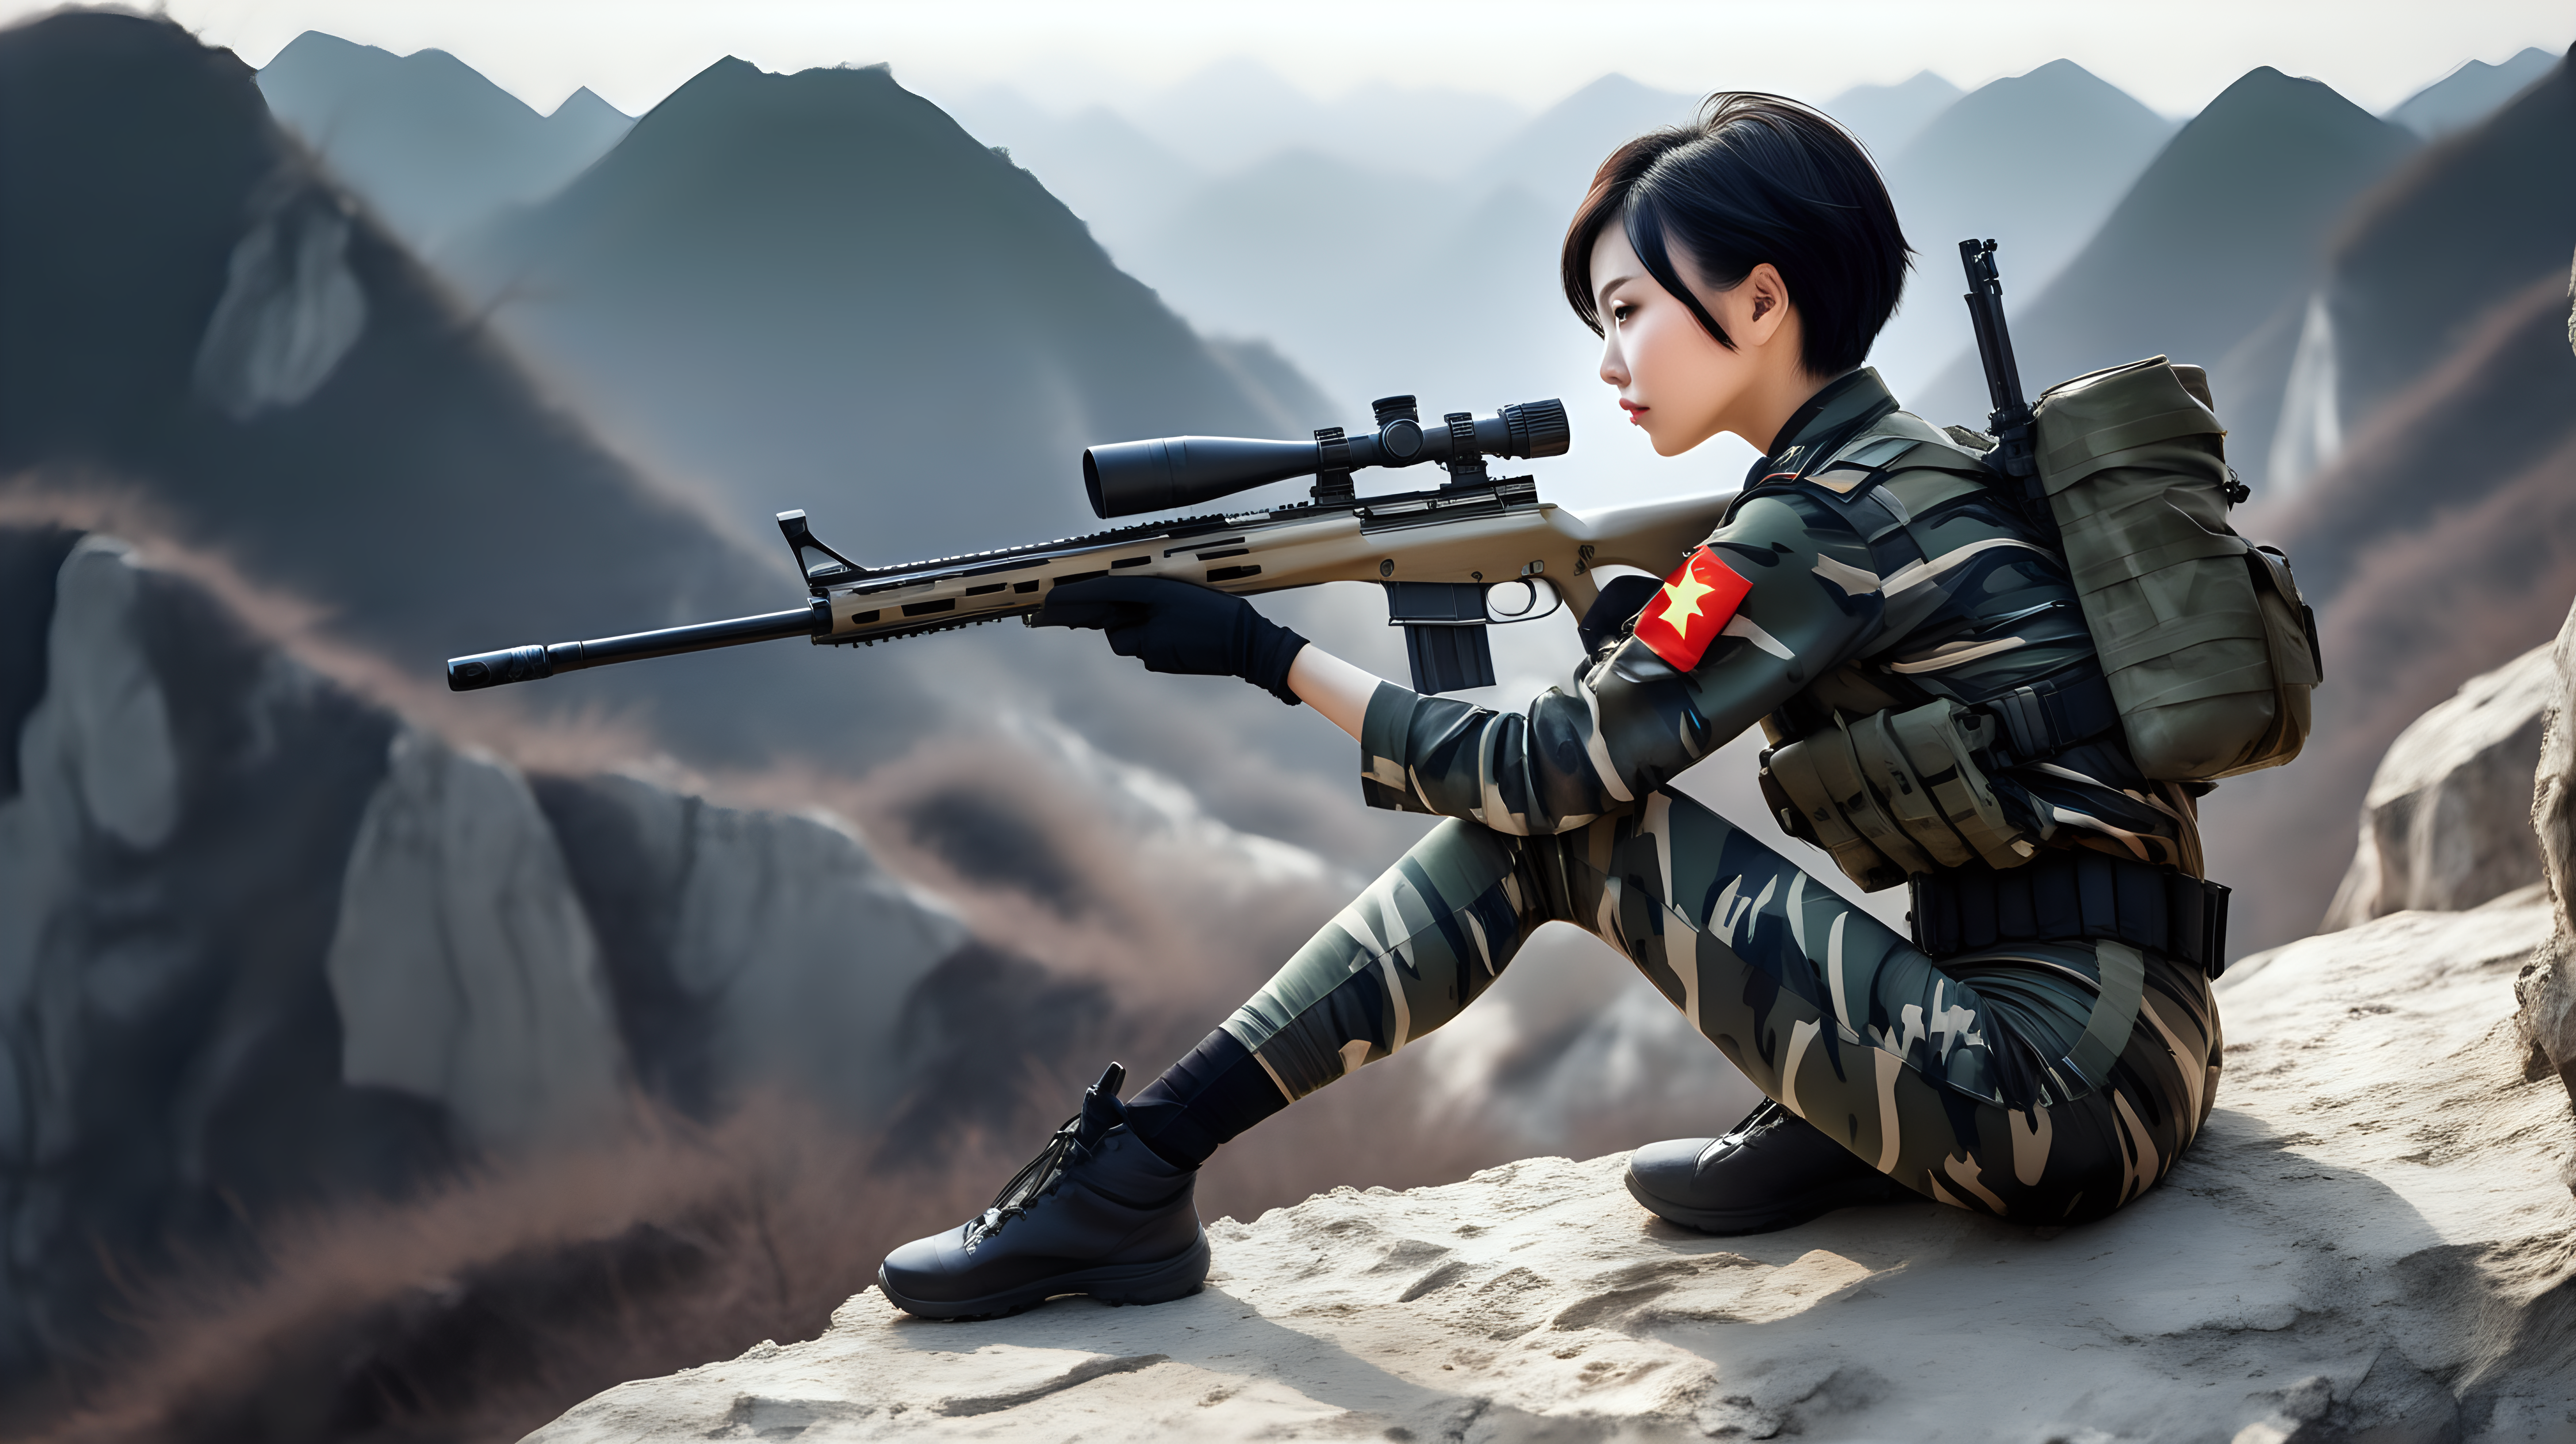 Chinese female soldierShort hairBlack hairCamouflage leggingsLying on the